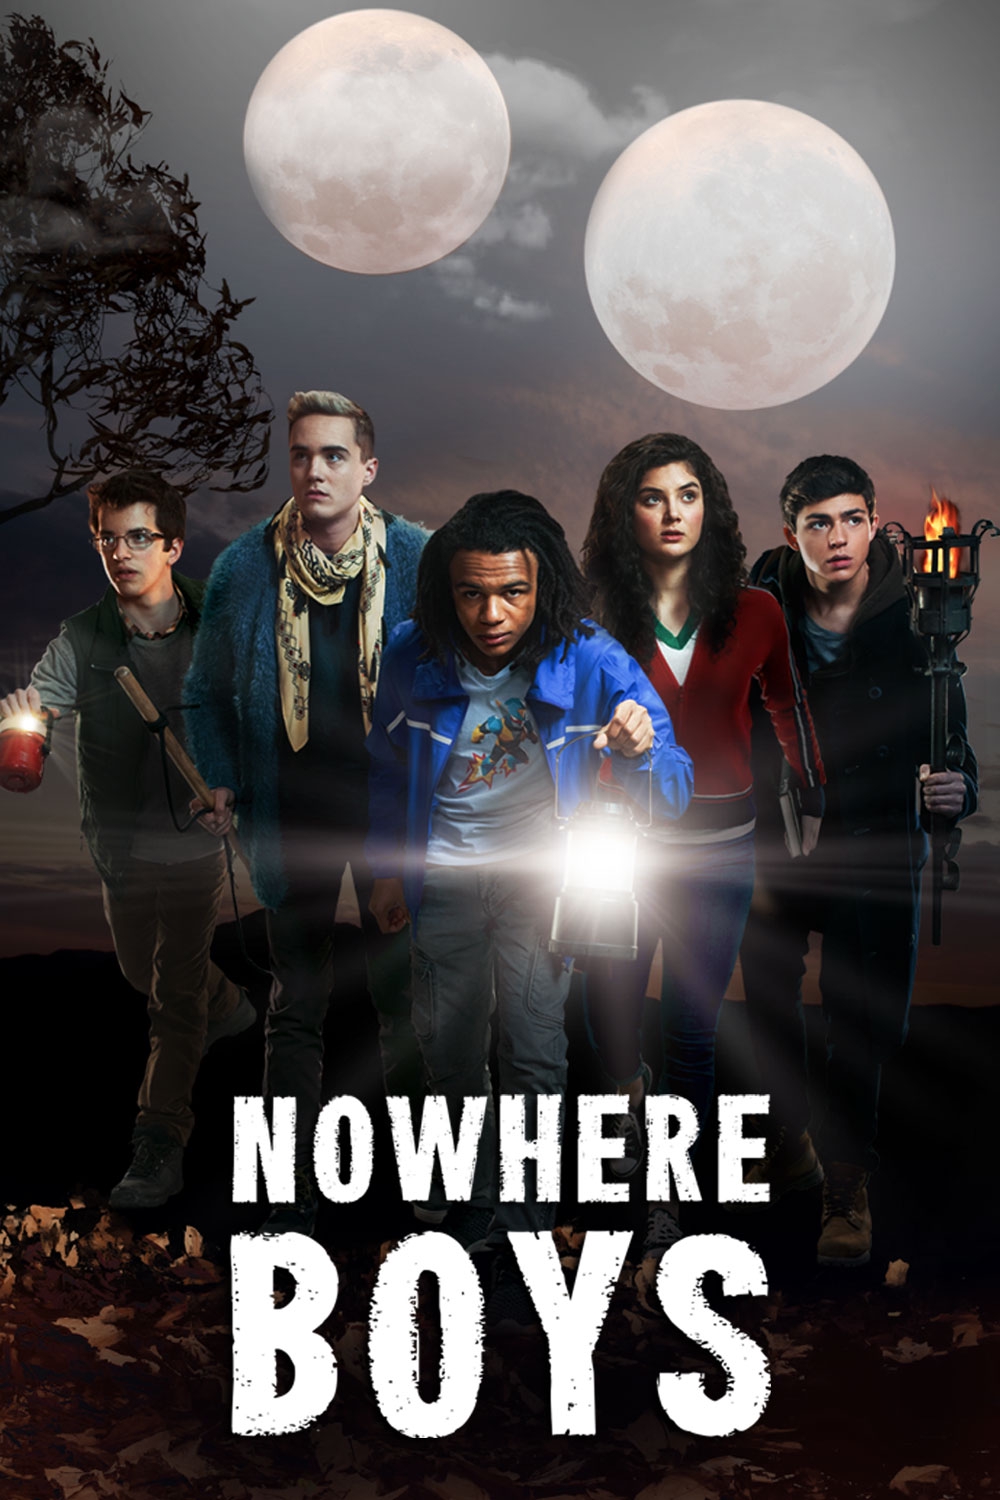 Nowhere. Nowhere boy poster. Nowhere Special. Nowhere boy